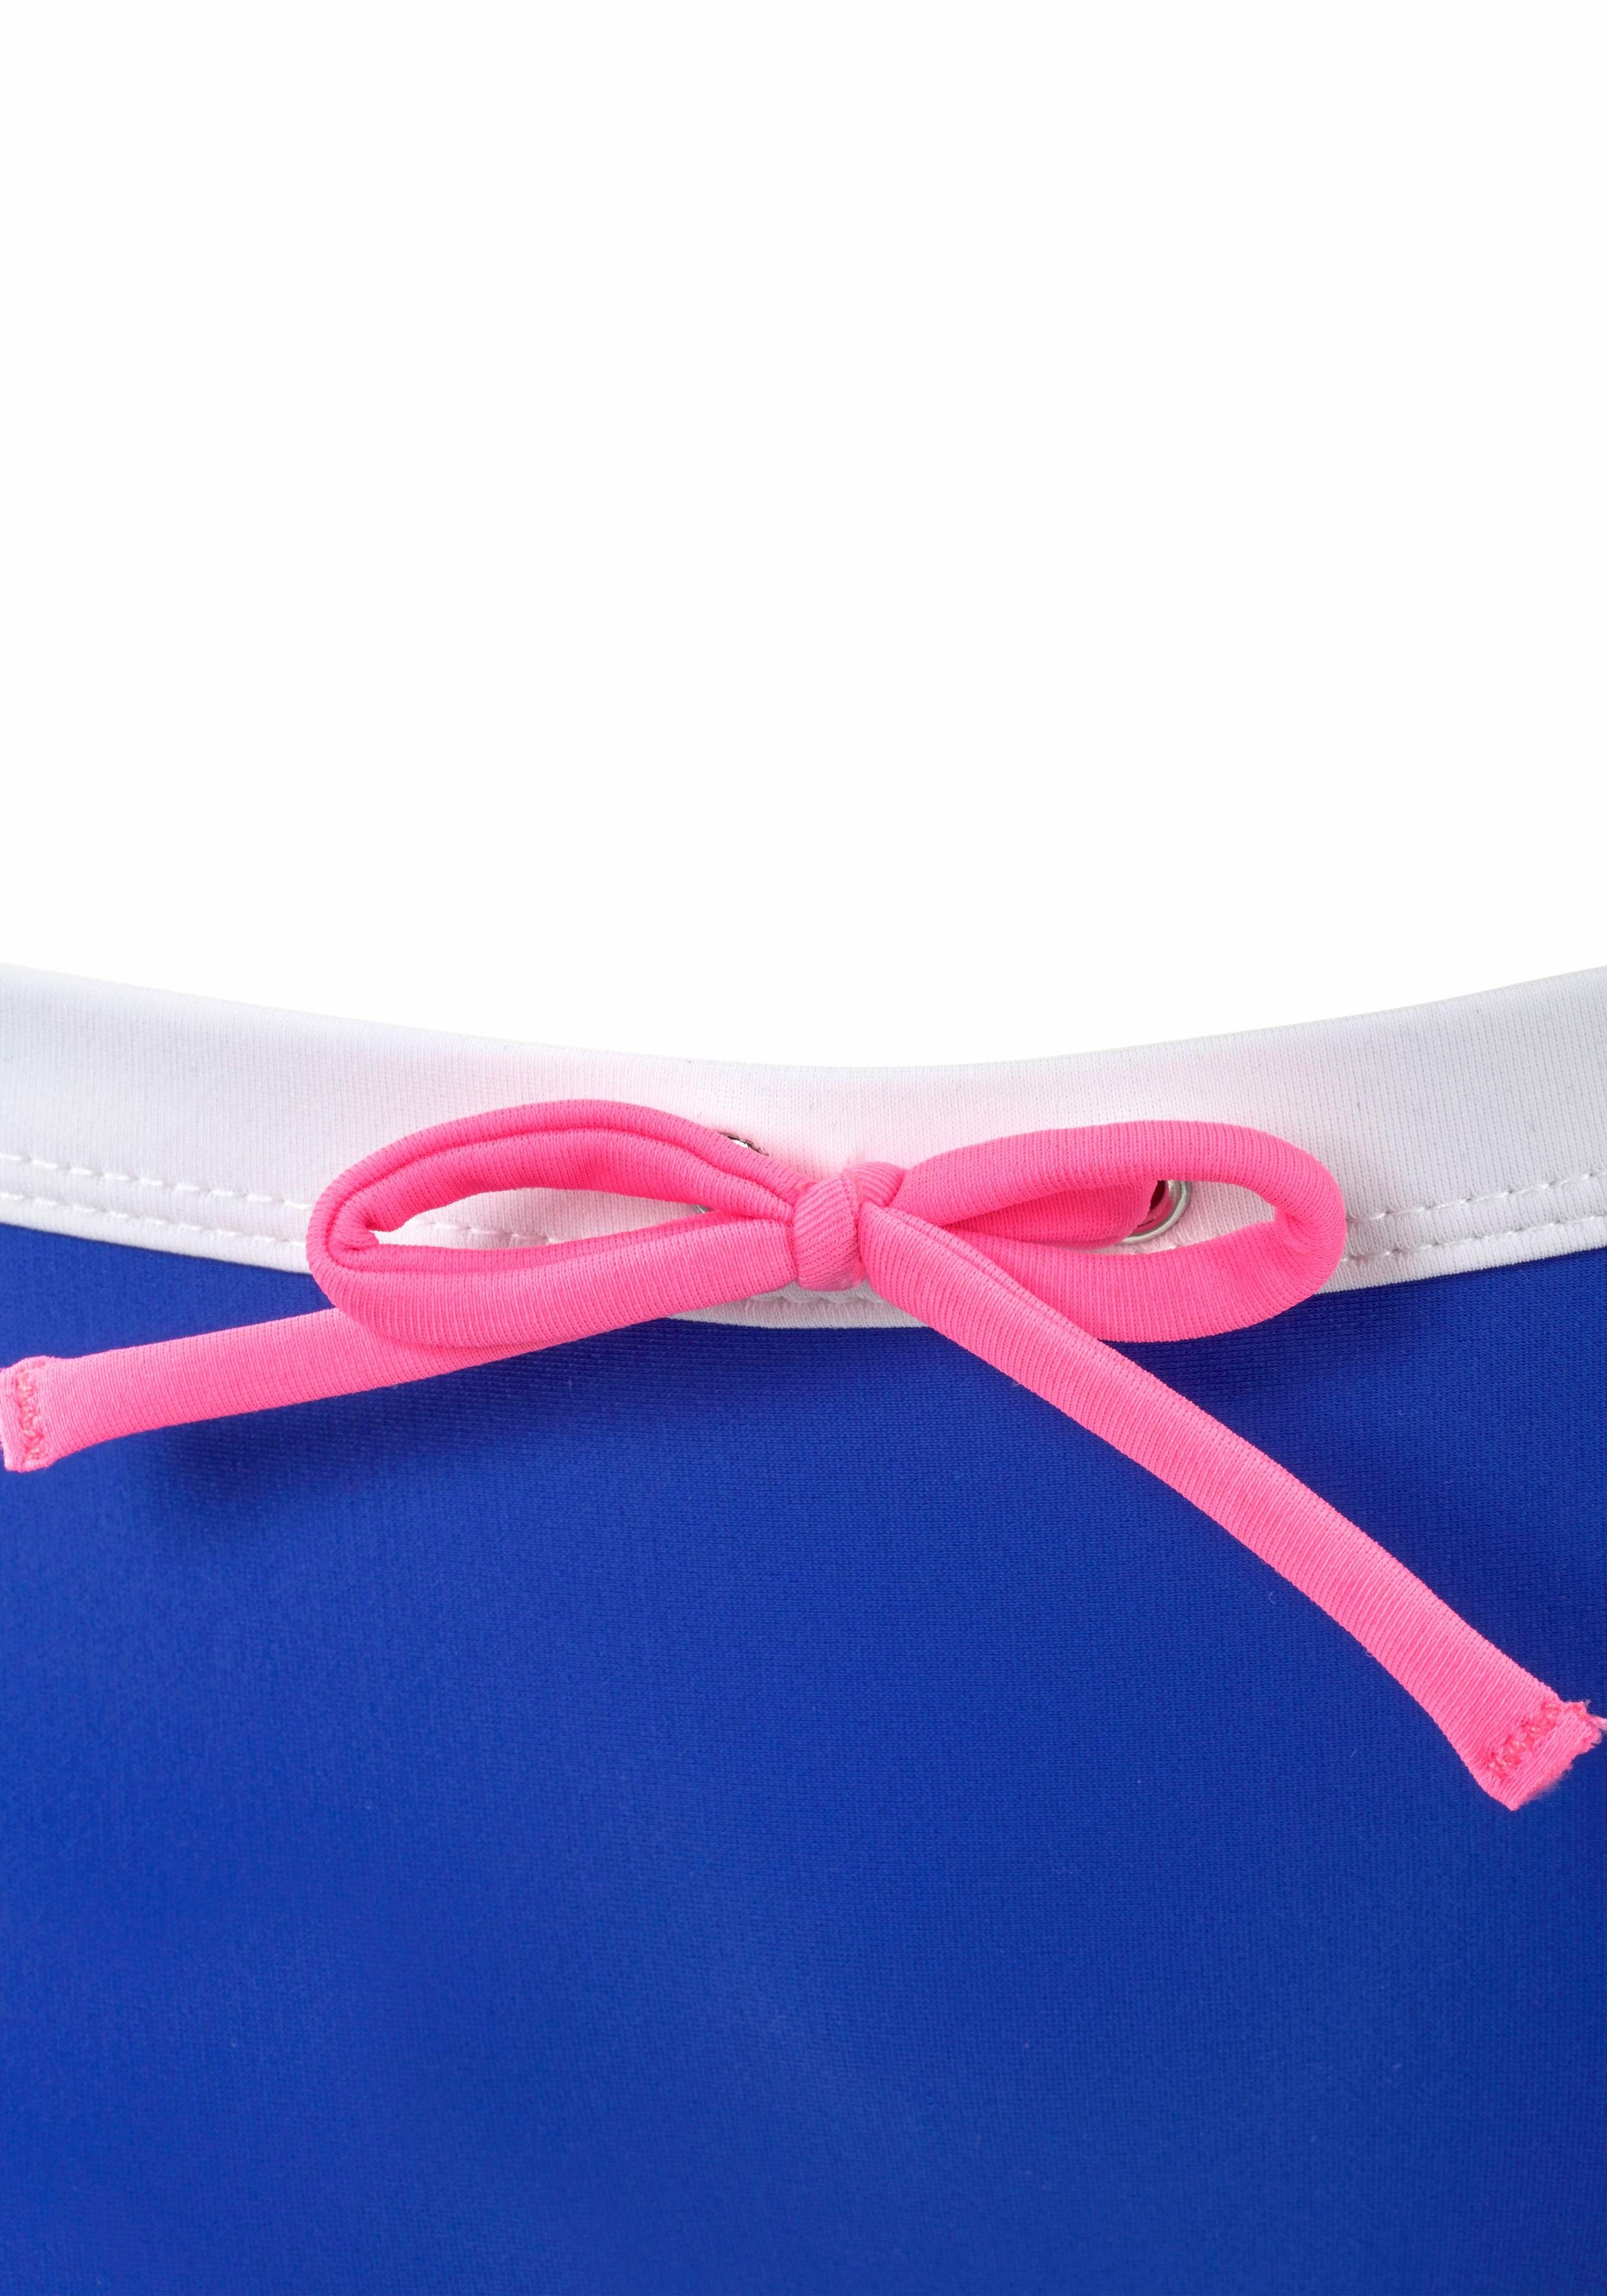 Bustier-Bikini Kontrastdetails mit Bench. blau-pink